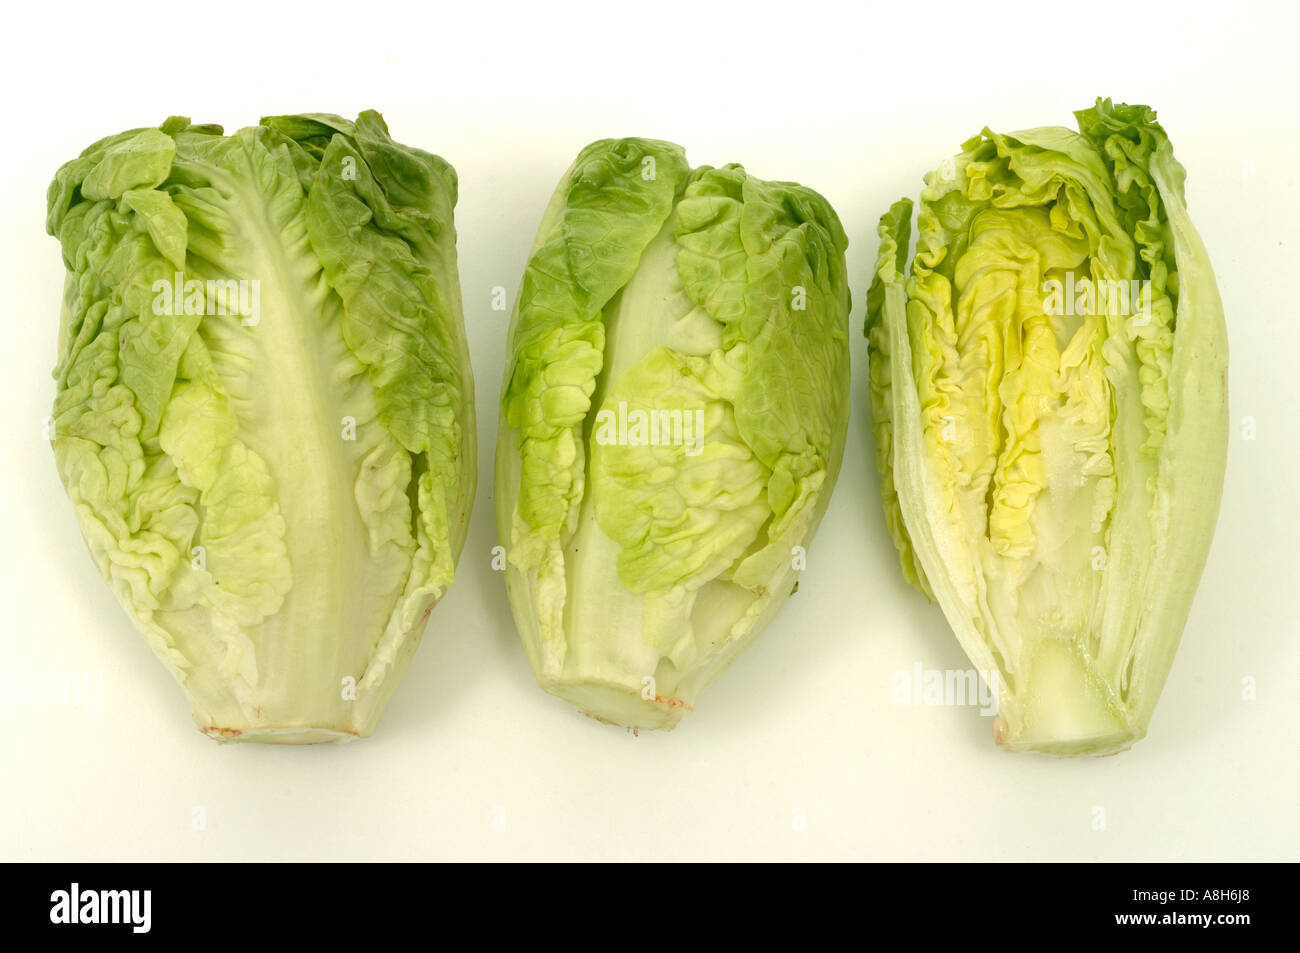 Vegetable produce typical supermarket bought Little Gem lettuces Stock Photo